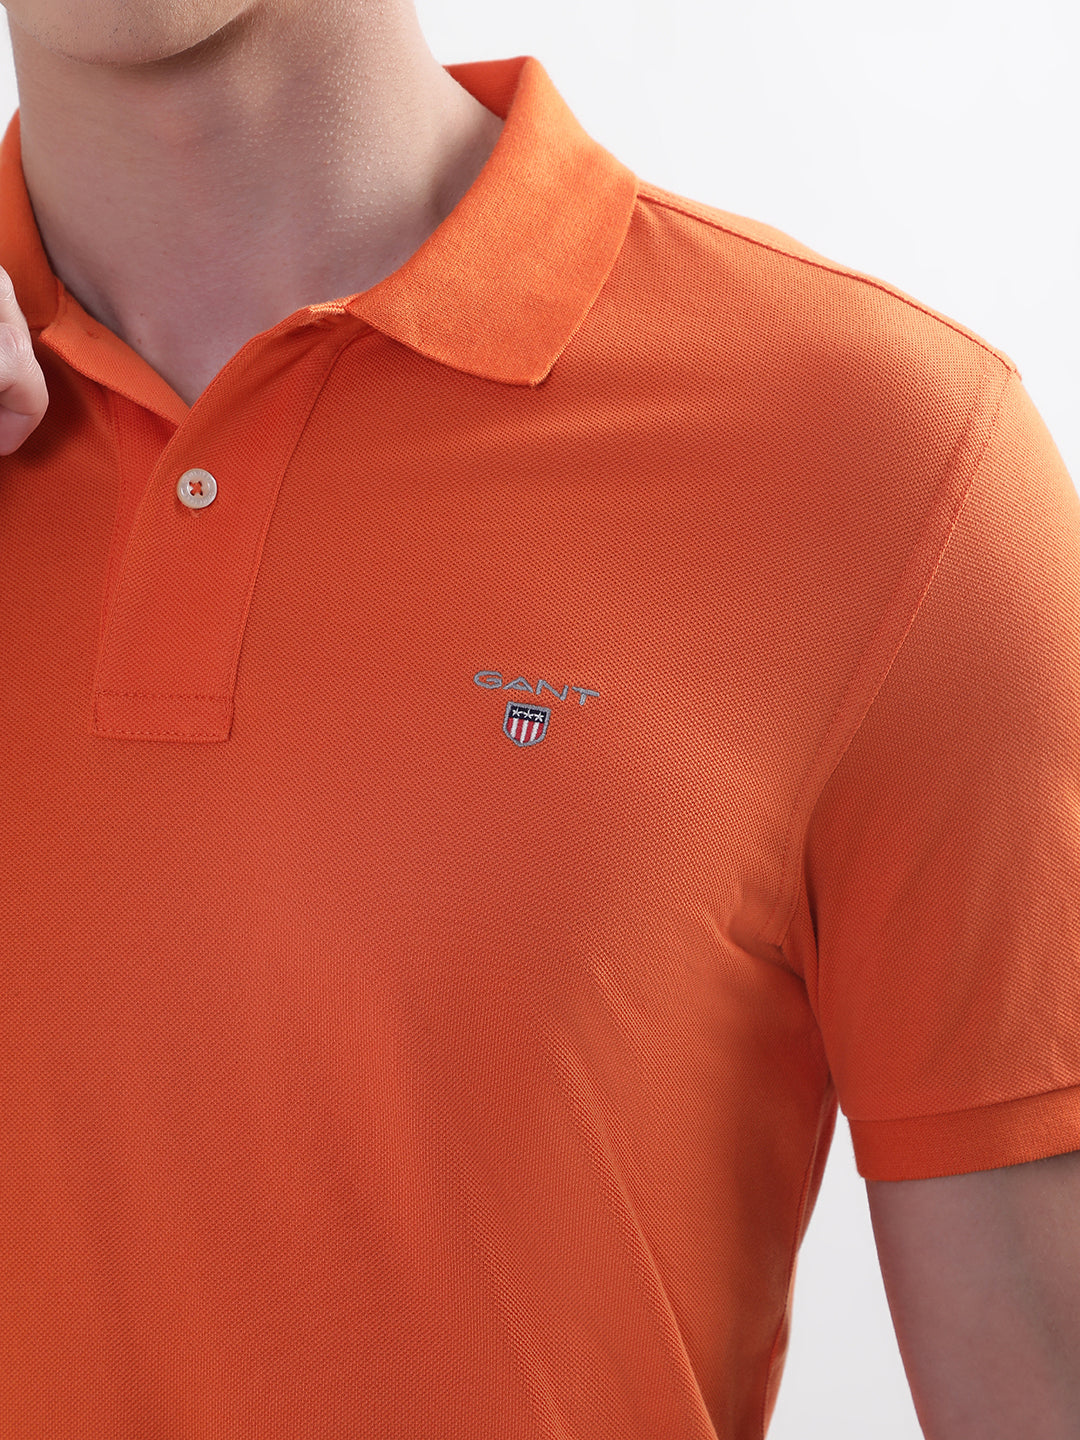 Gant Orange Original Regular Fit Pique Polo T-Shirt